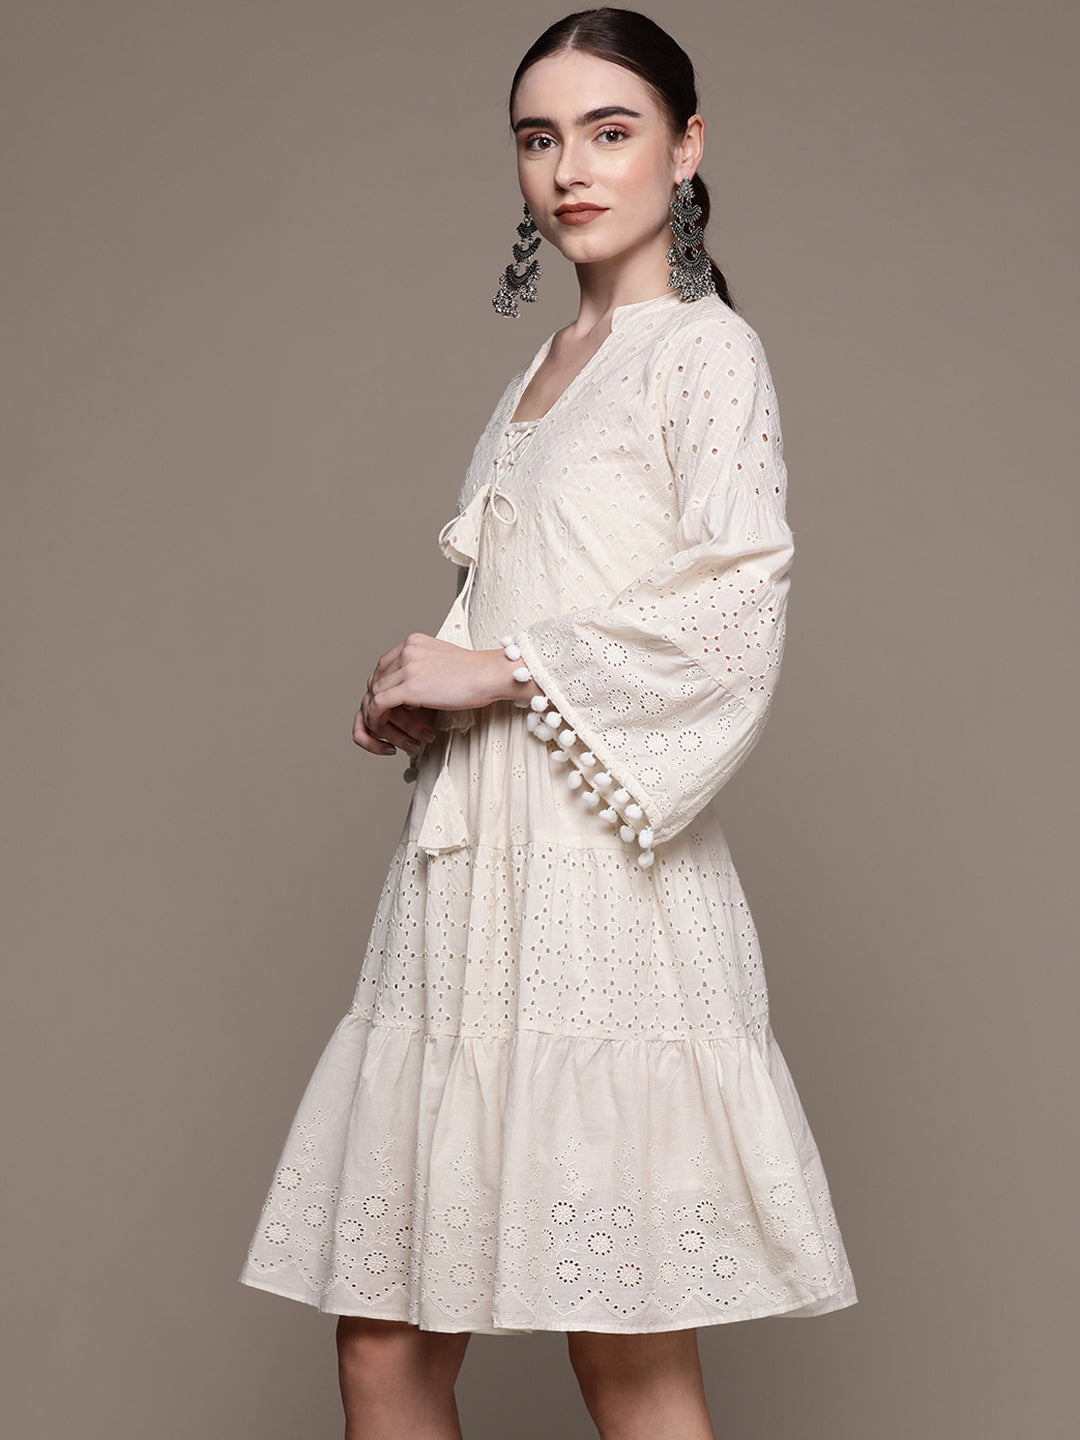 Ishin Women's Cotton Off White Schiffli Embroidered A-Line Dress